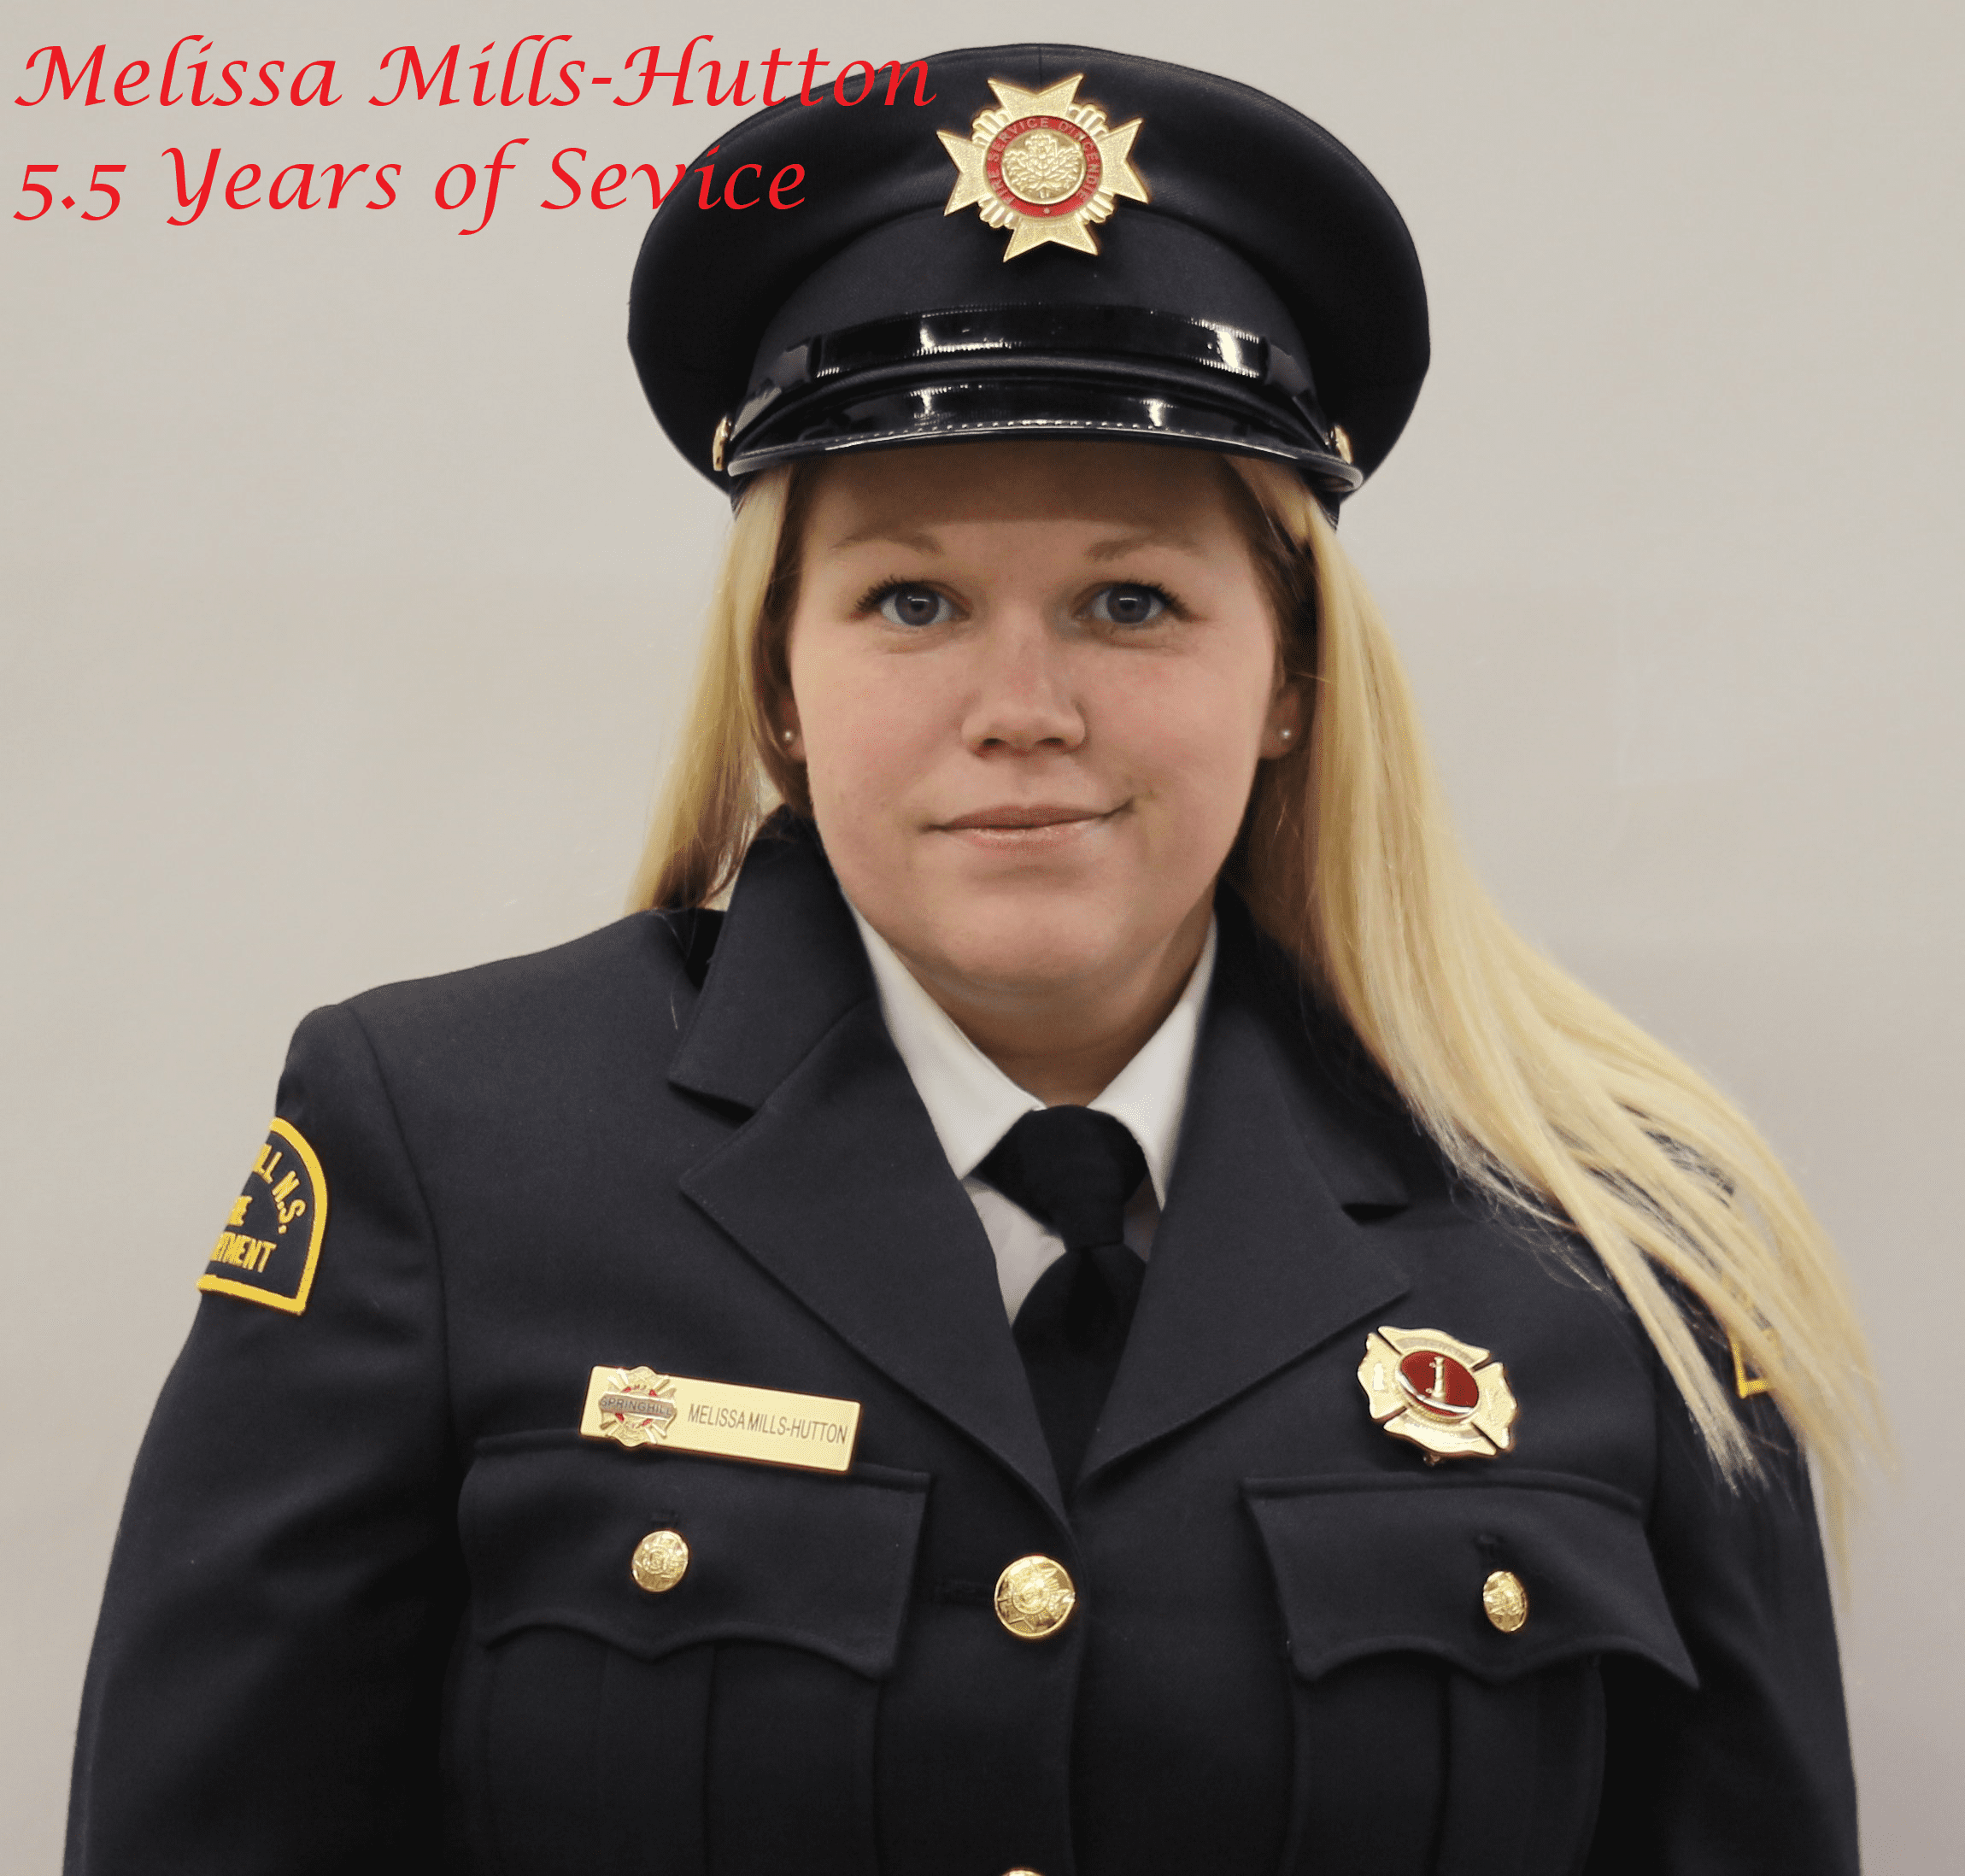 Melissa Mills-Hutton